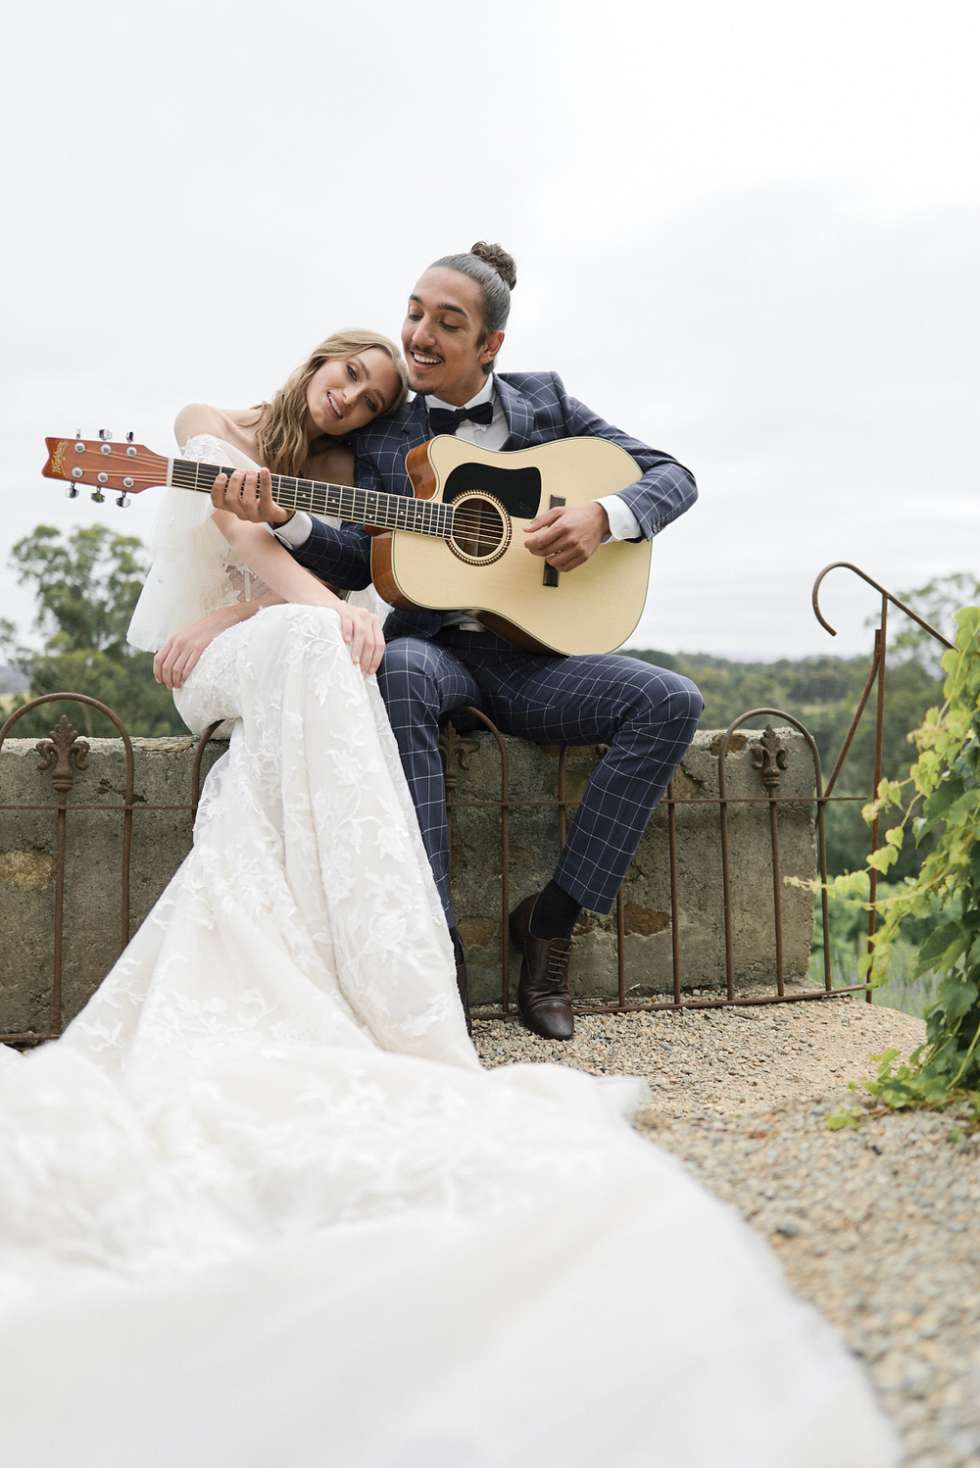 Romance Isn't Dead: A Romantic Wedding Theme Photoshoot